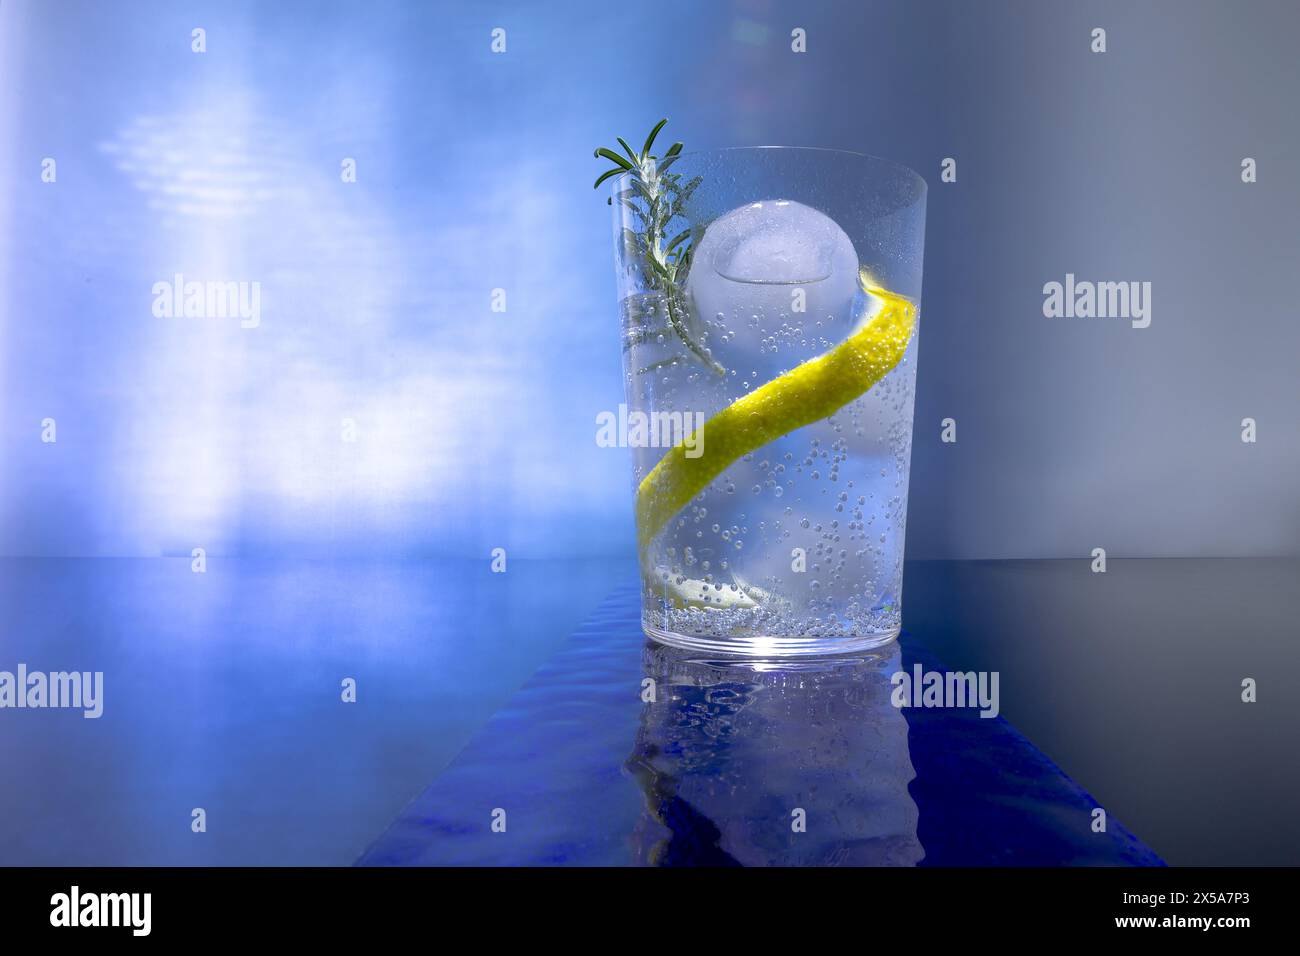 Refreshing gin tonic with ice sphere and lemon peel garnish on blue background Stock Photo